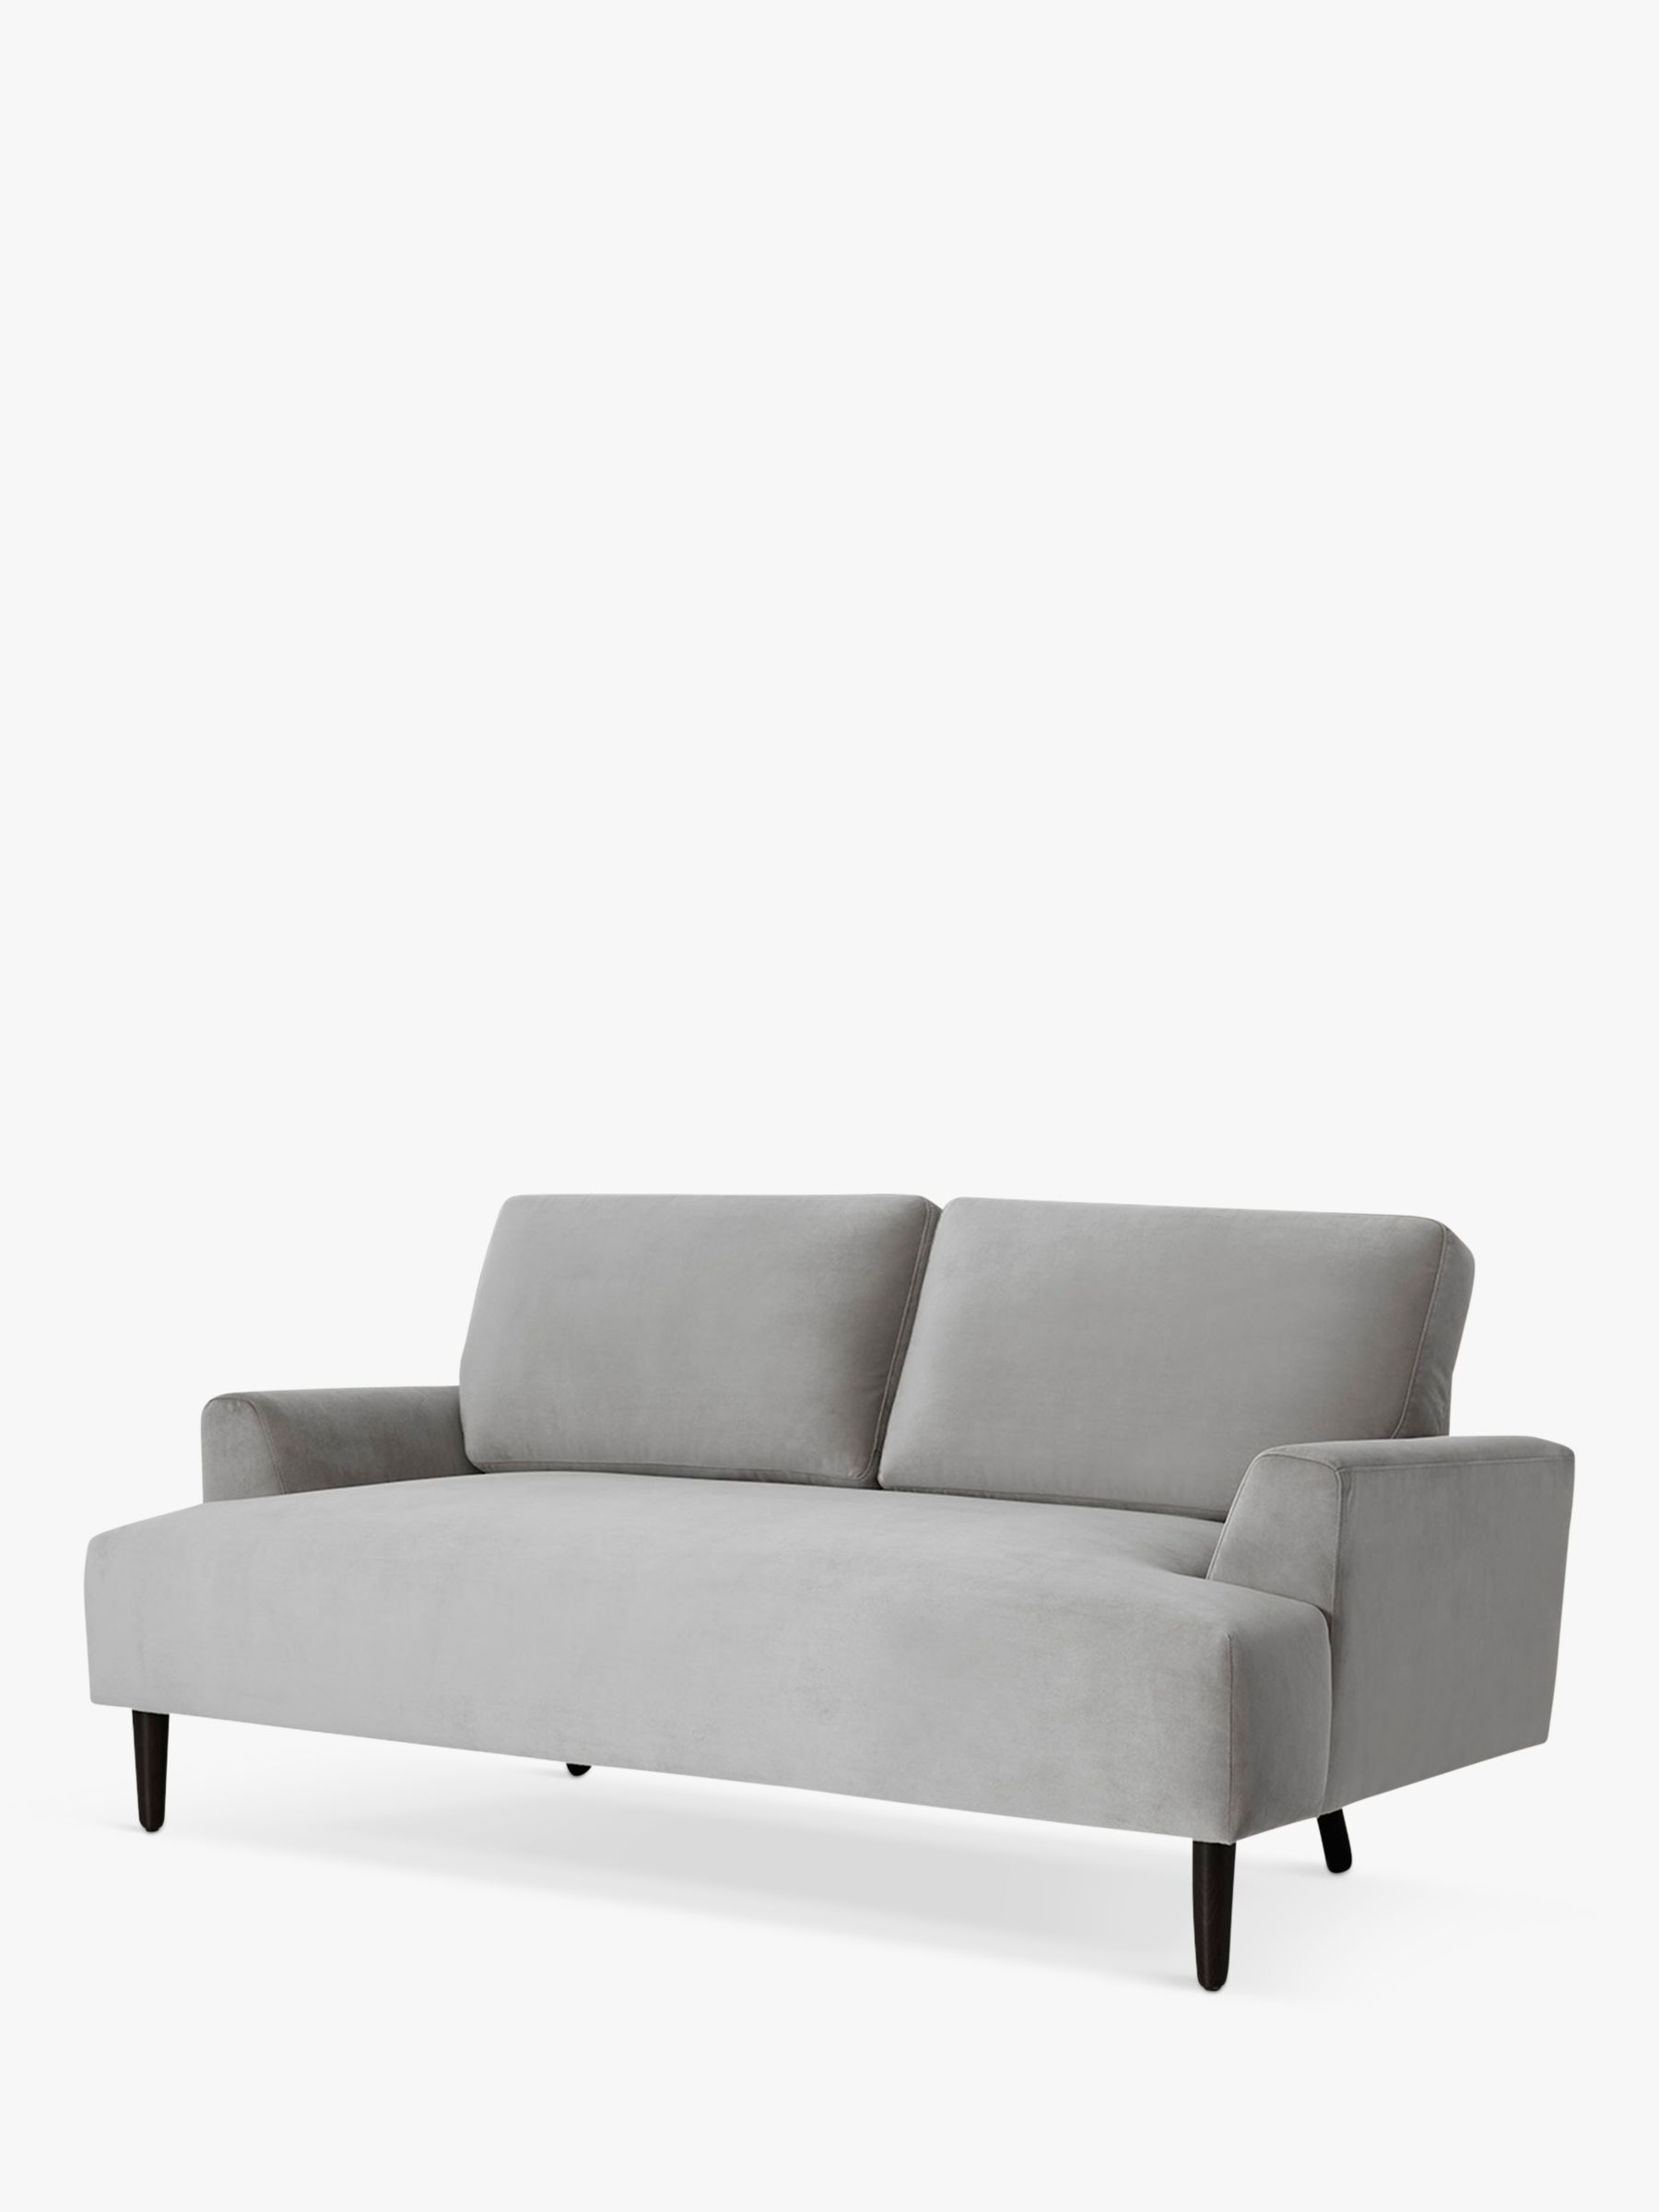 Swyft Model 05 Medium 2 Seater Sofa